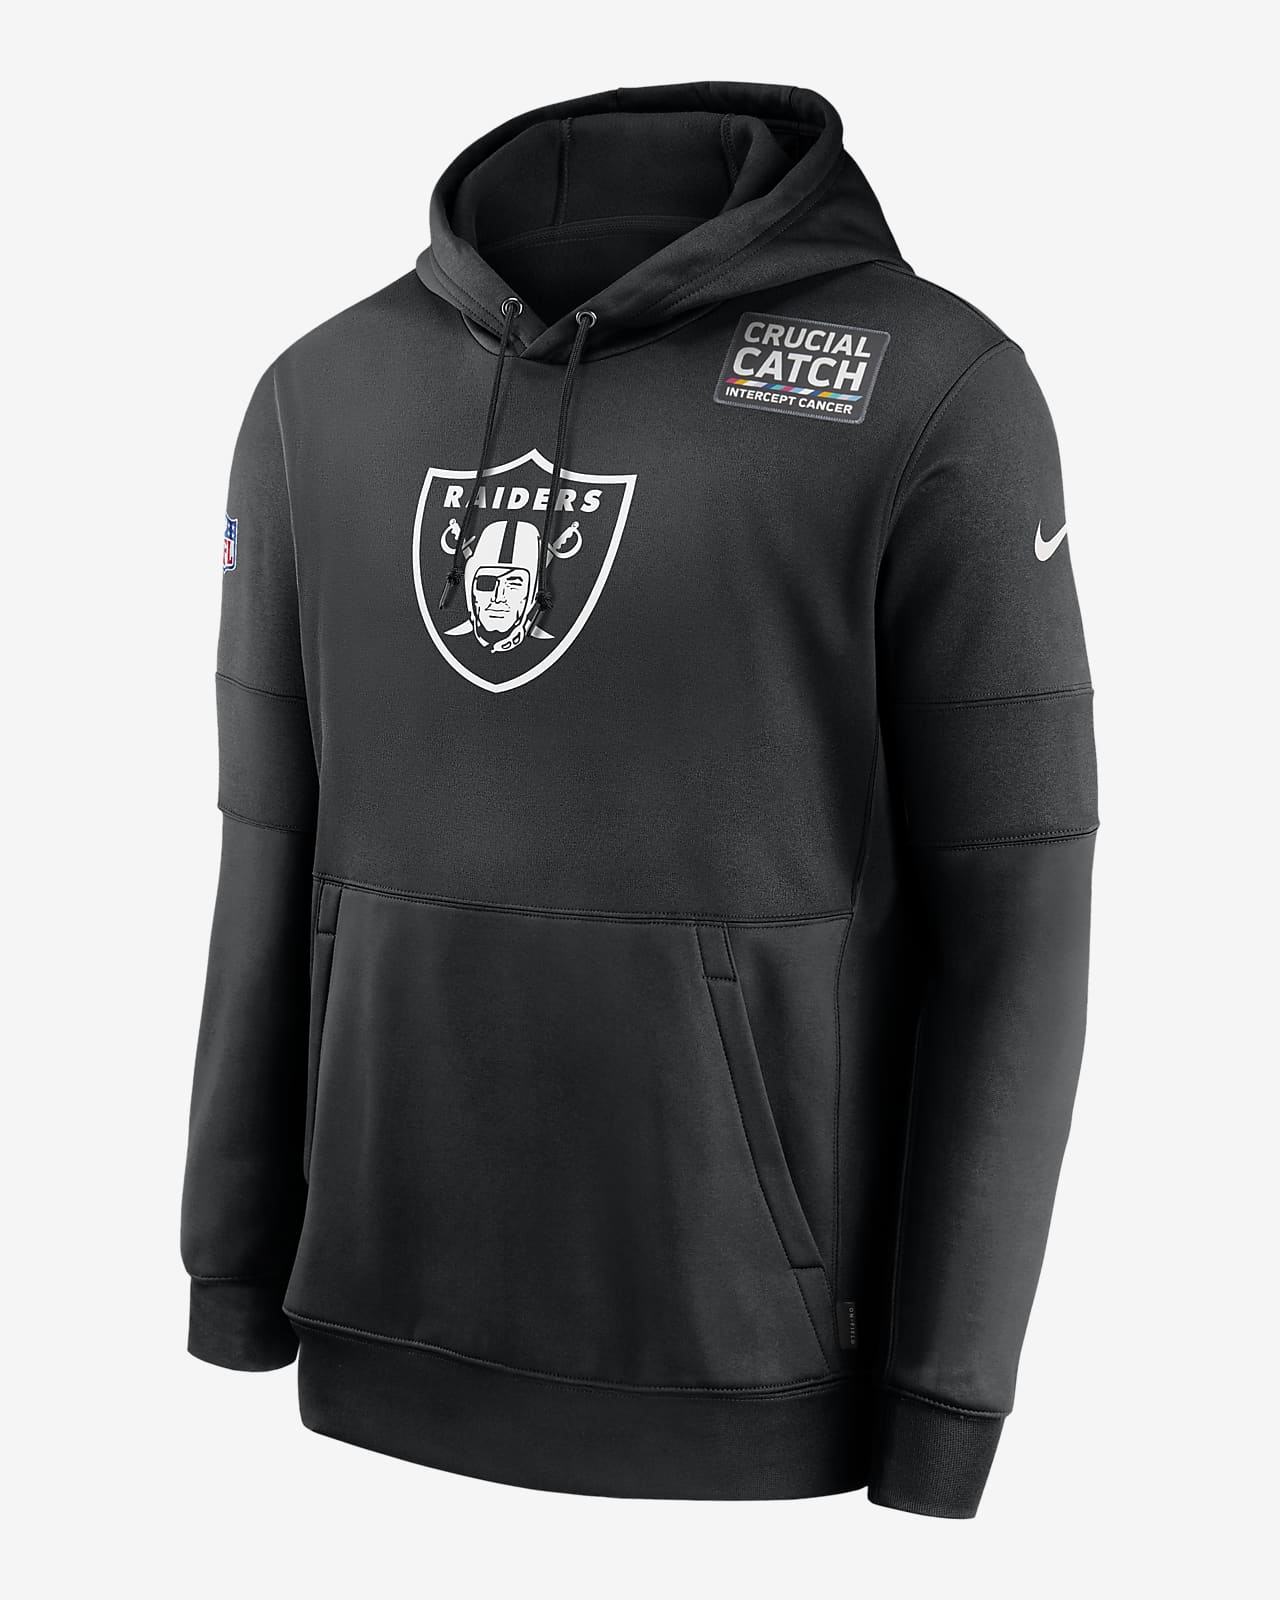 Sudadera con capucha para hombre Nike Therma Crucial Catch (NFL Raiders).  Nike.com